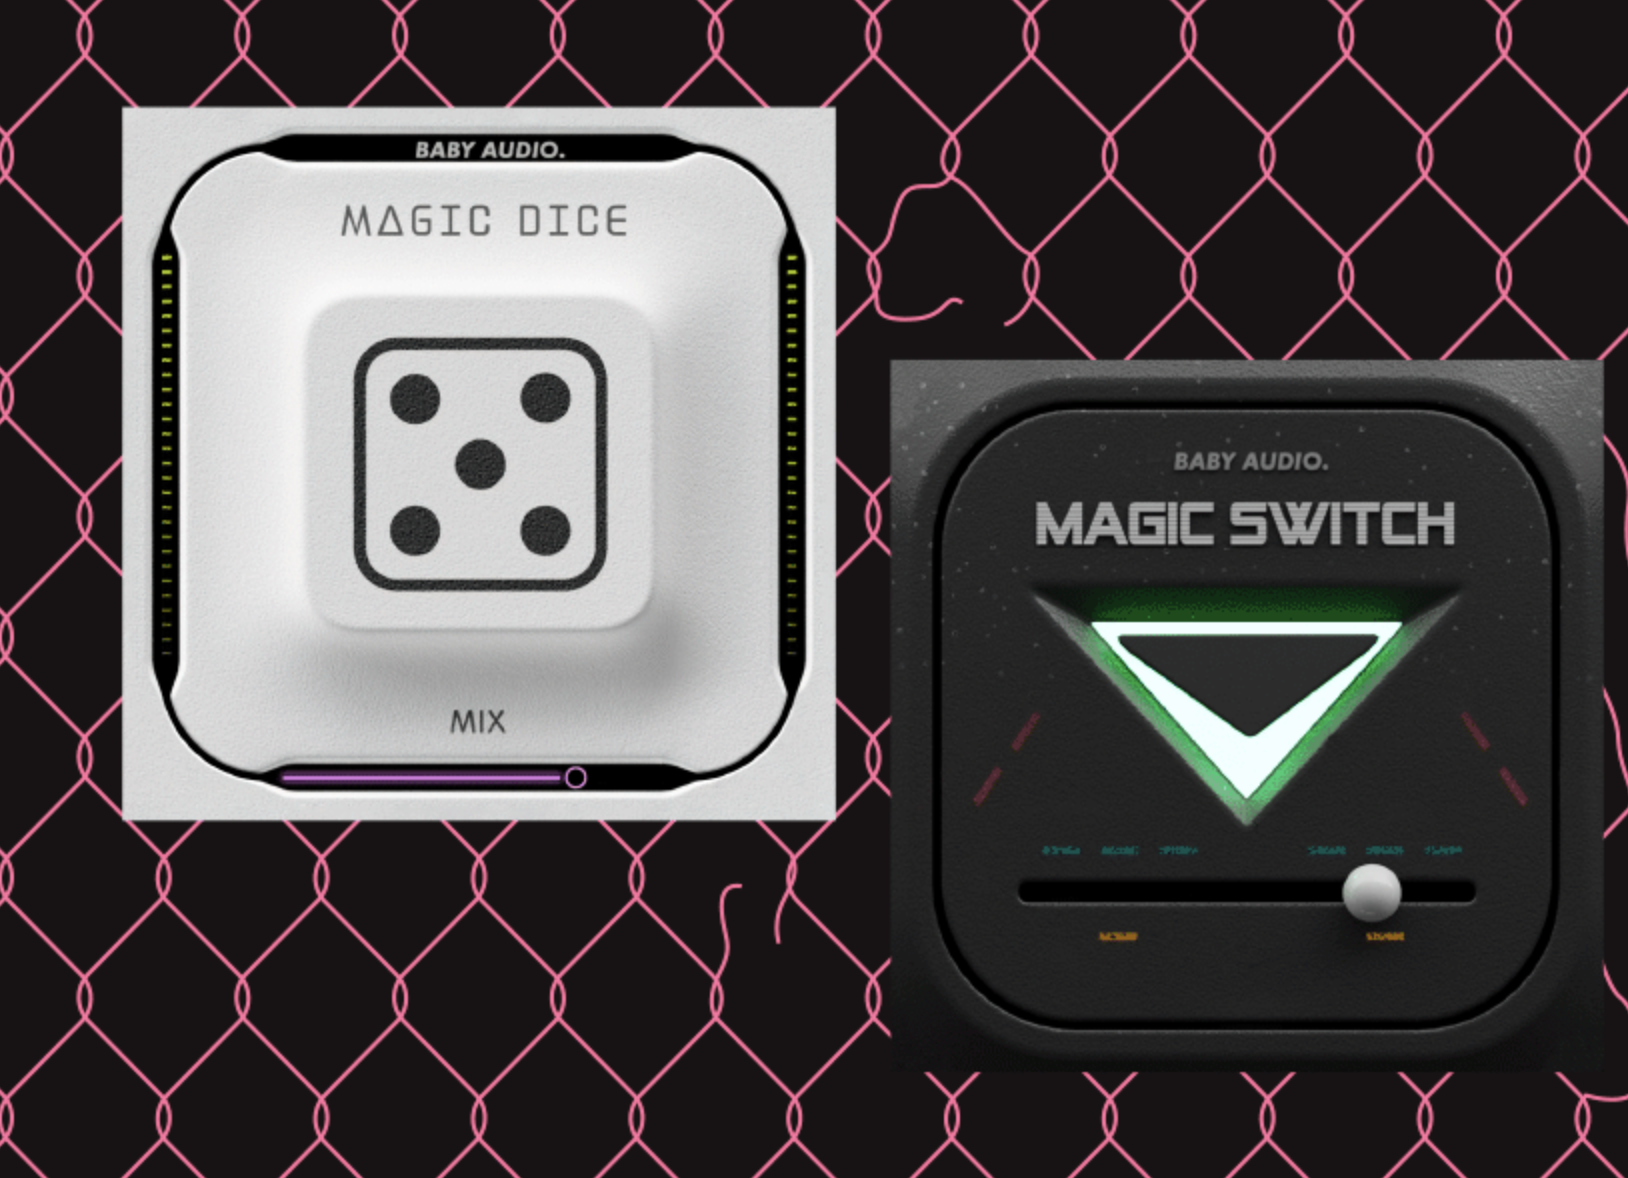 Magic Dice and Magic Switch